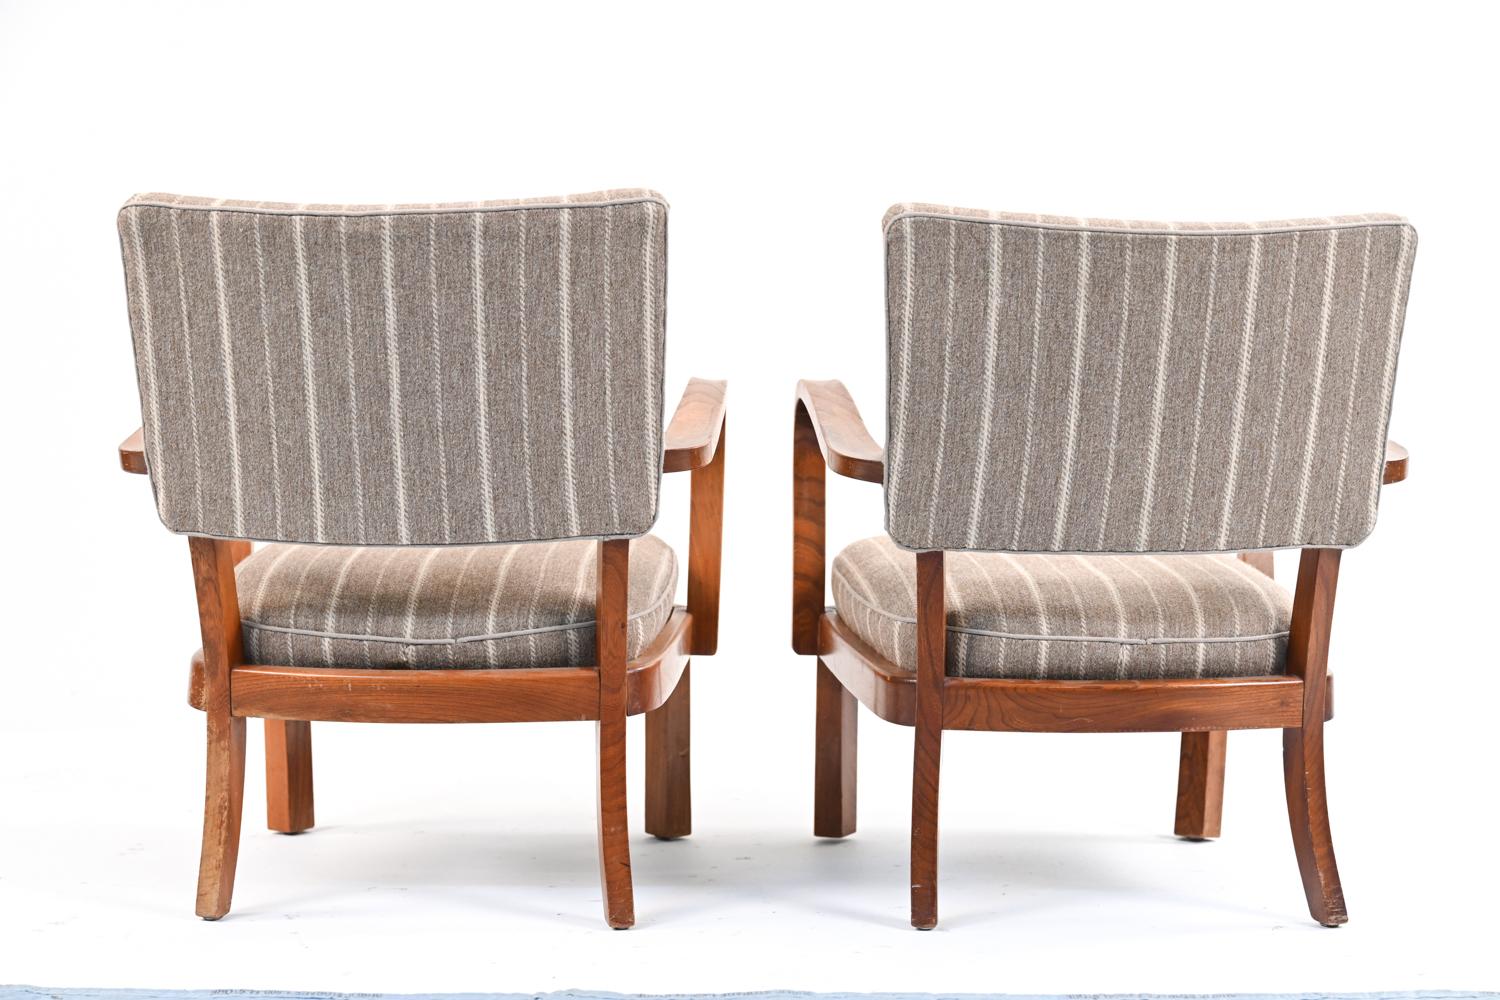 Pair of Scandinavian Elm Wood Bridge Chairs, 1940's-1950's For Sale 8